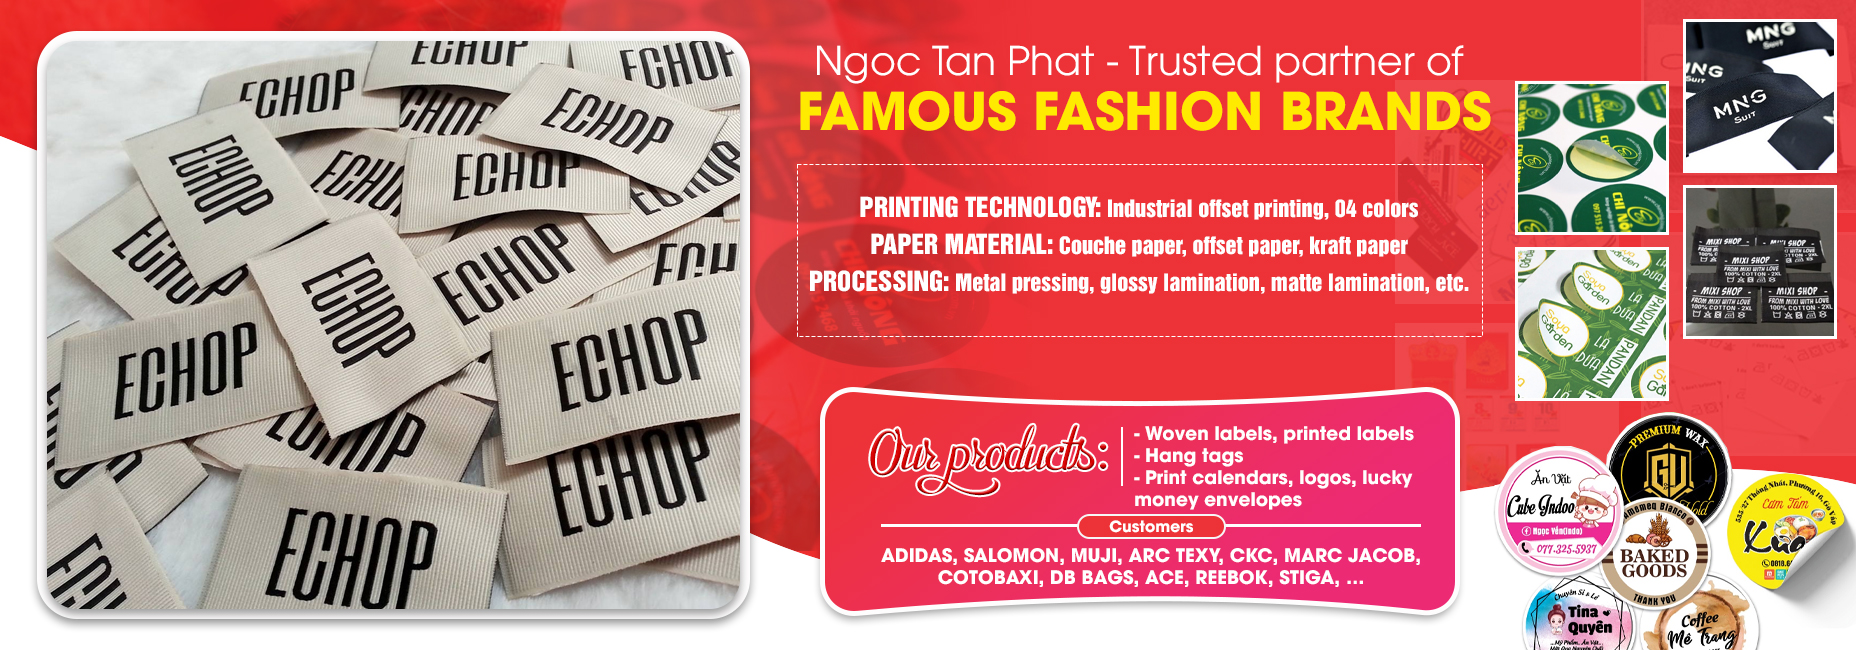 Ngoc Tan Phat Company Limited